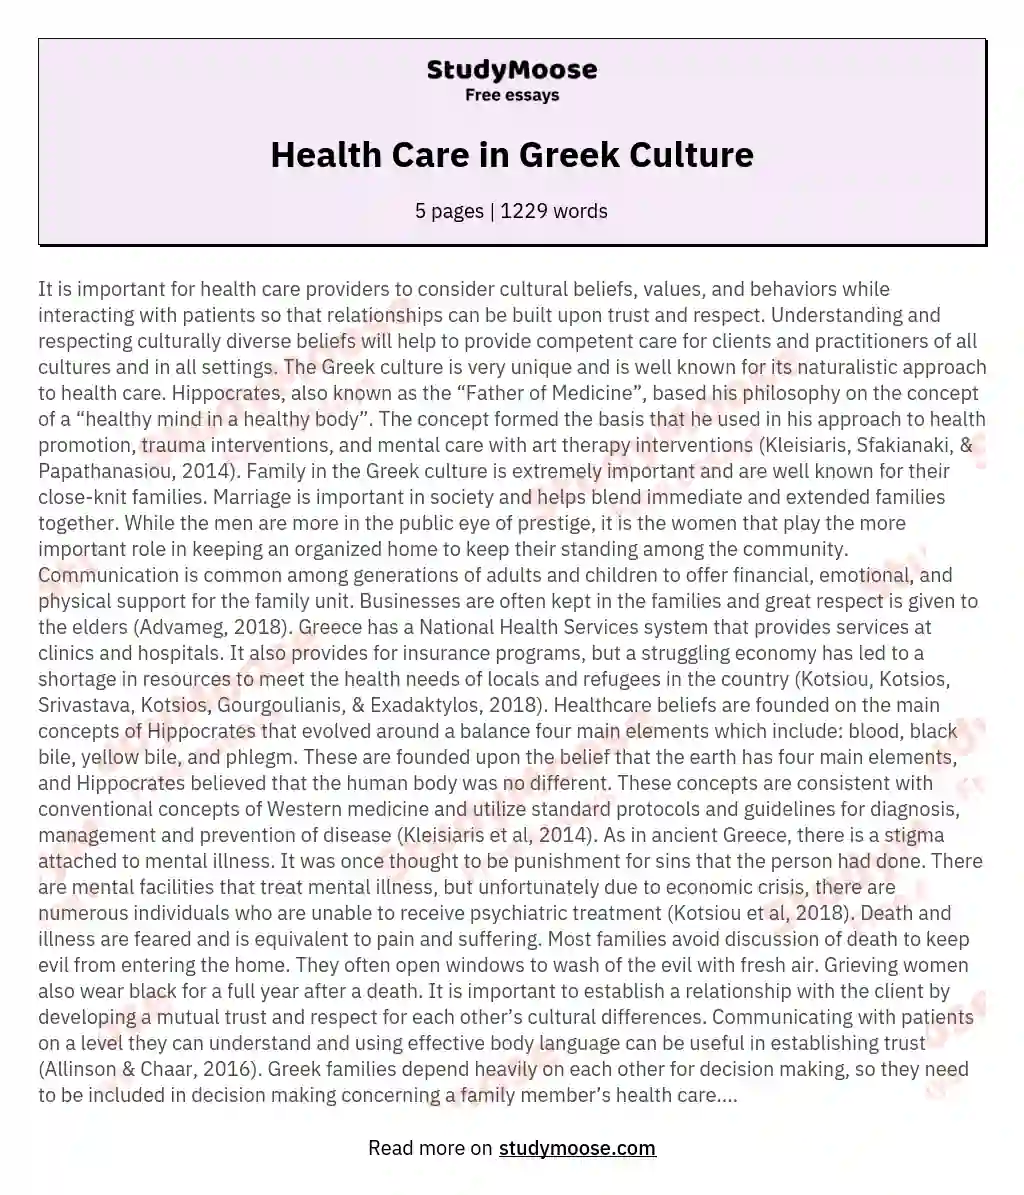 Health Care in Greek Culture essay